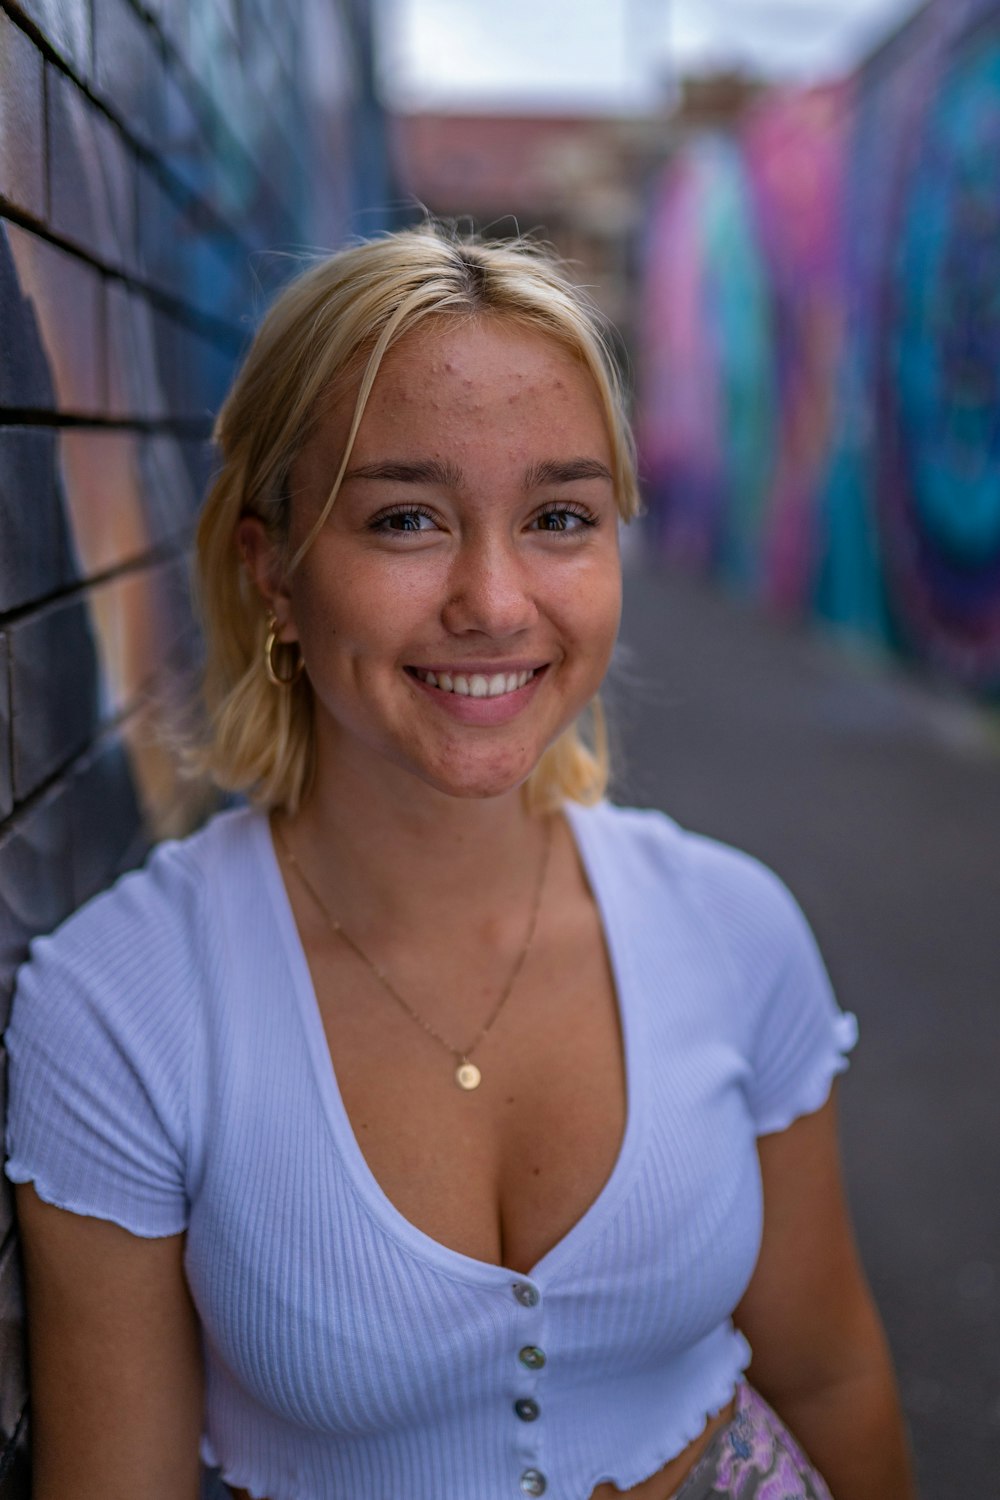 woman in white v neck shirt smiling